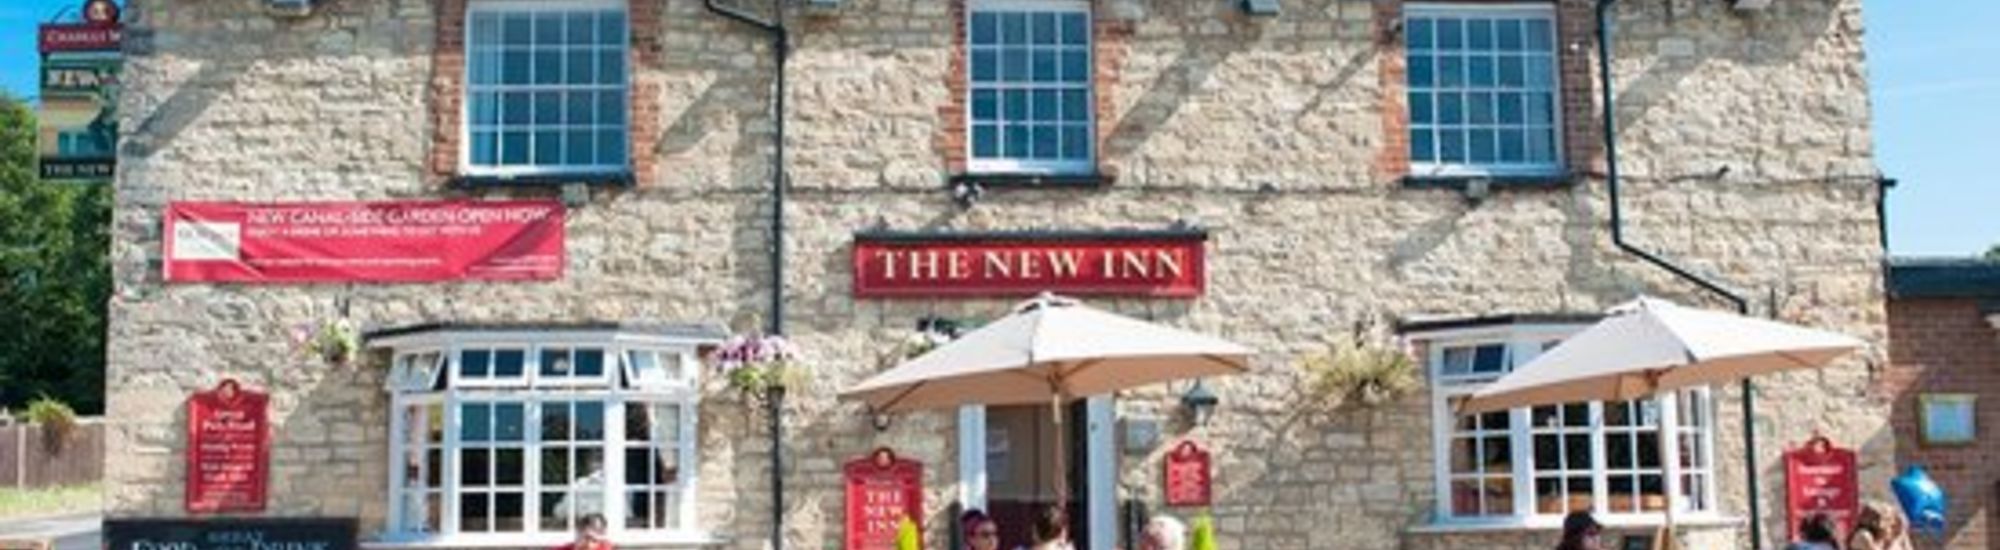 The New Inn - Coming Soon